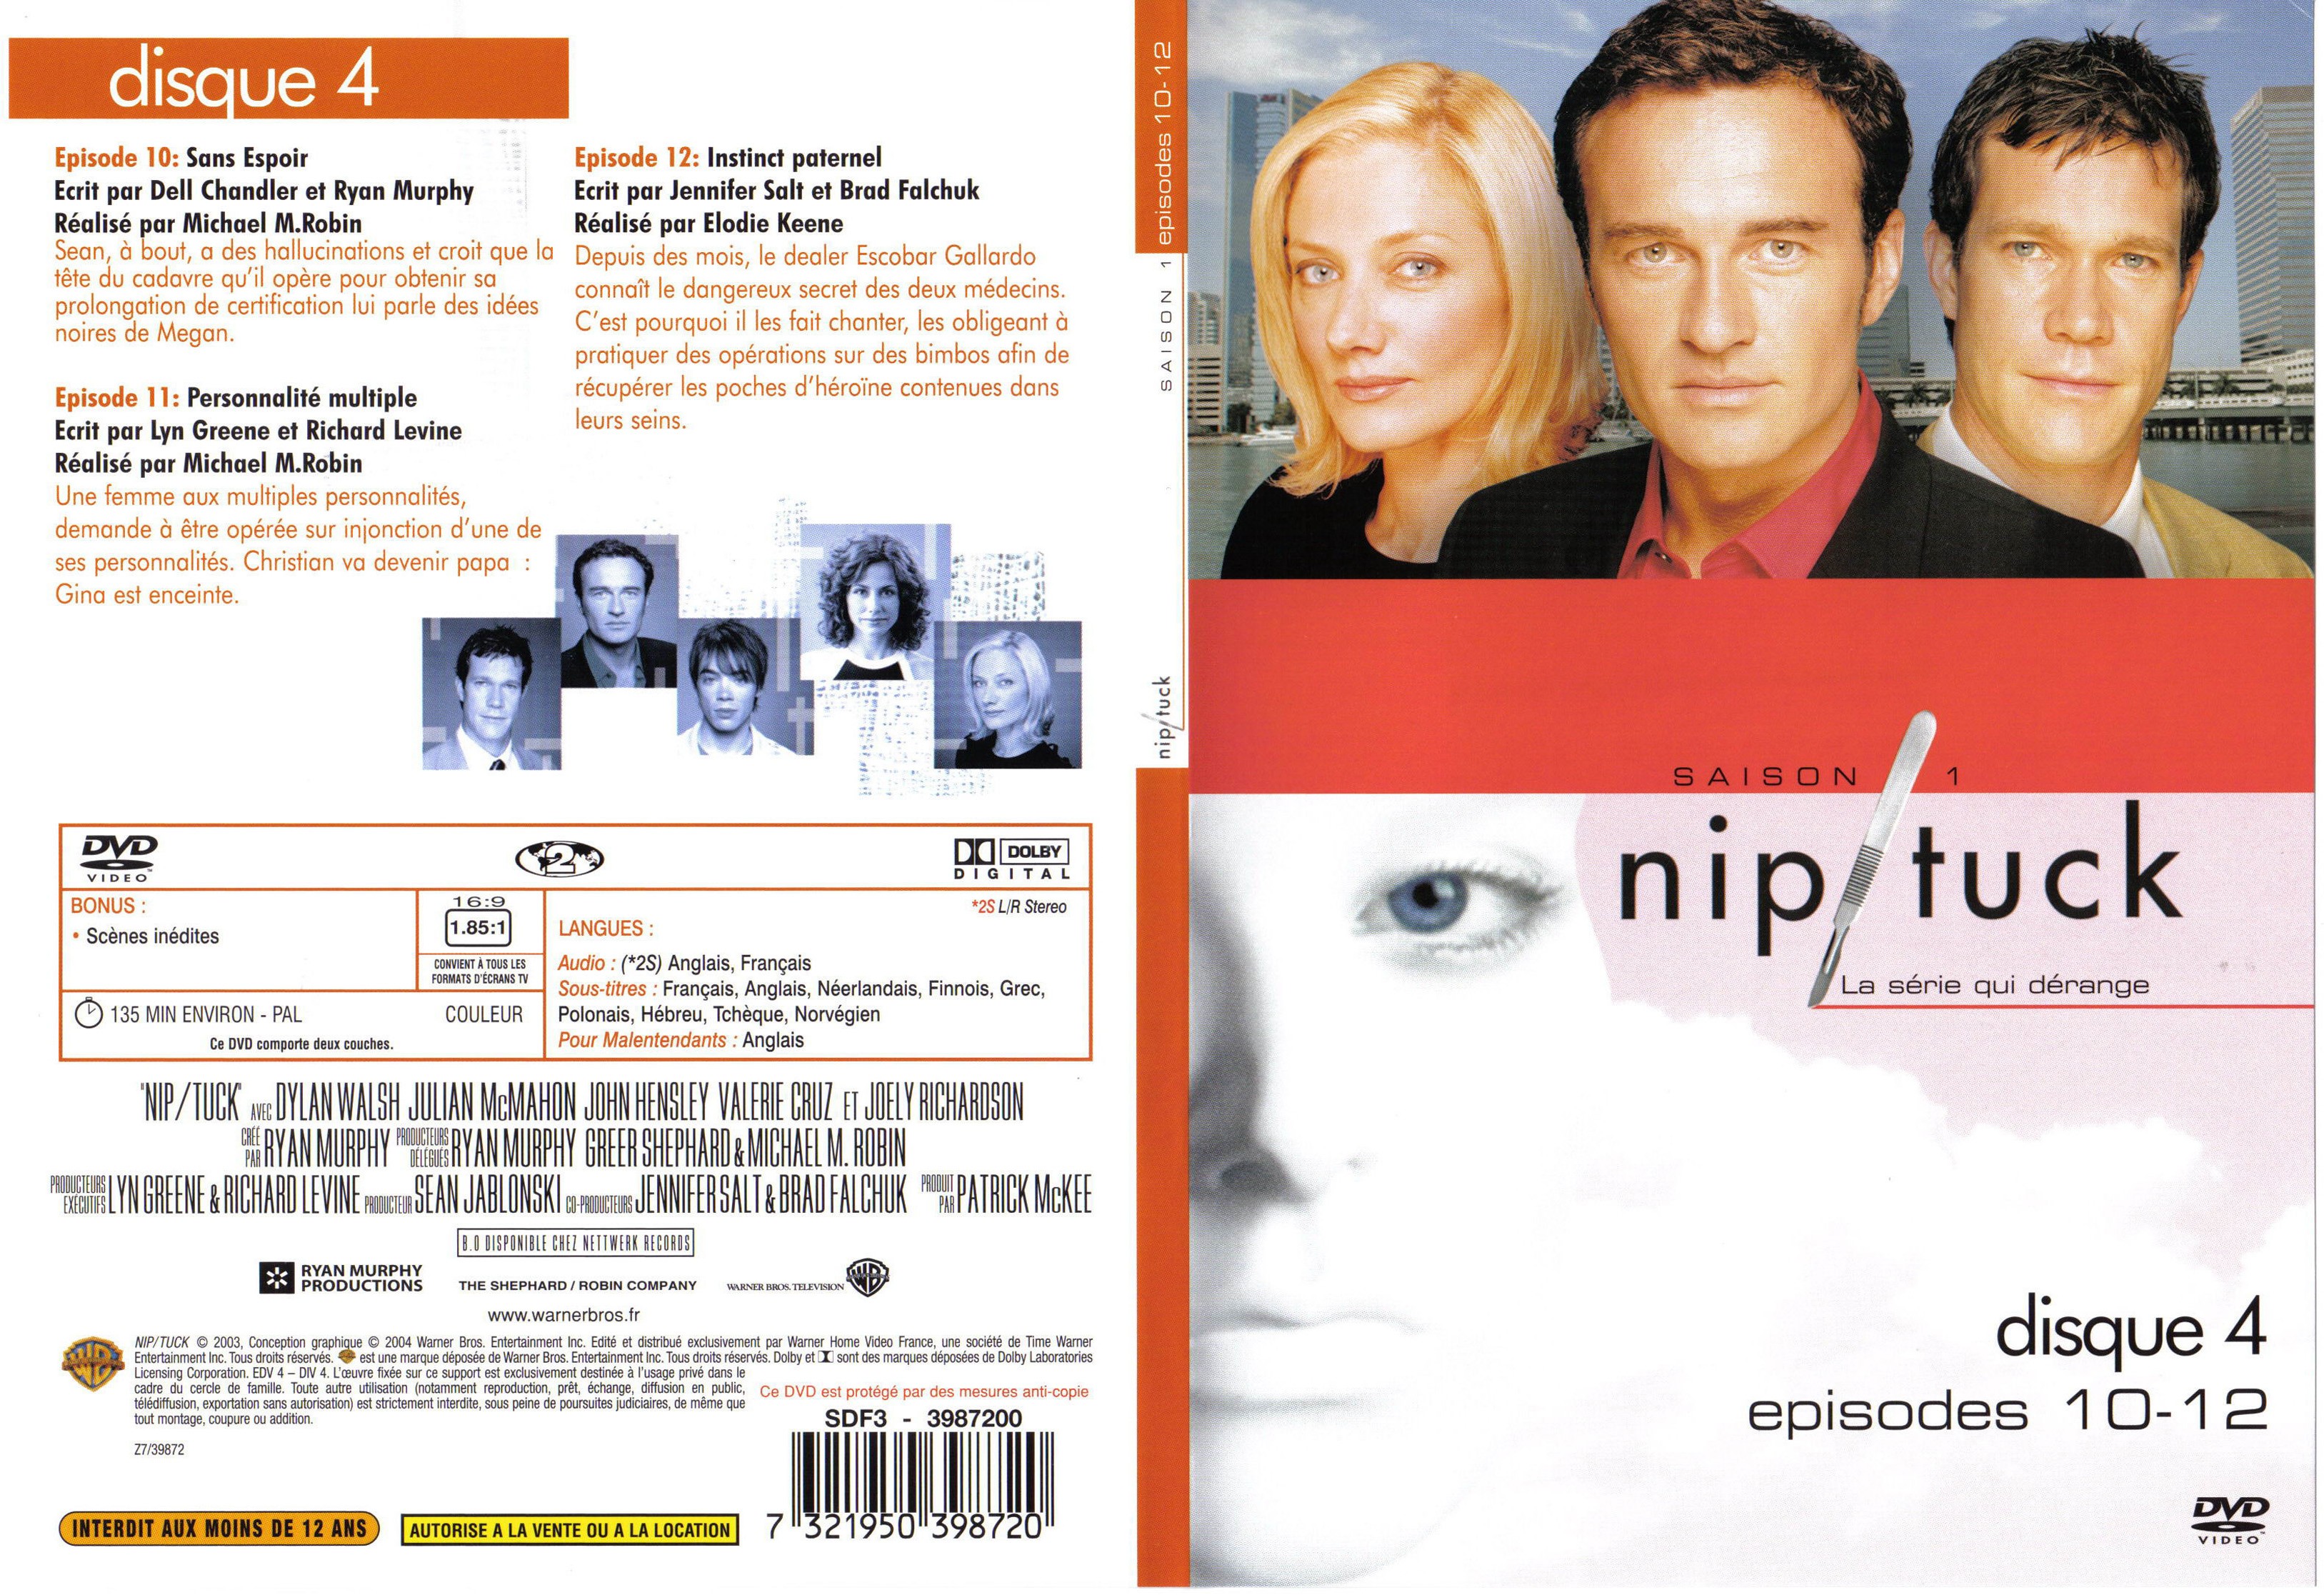 Jaquette DVD Nip-Tuck saison 1 dvd 4